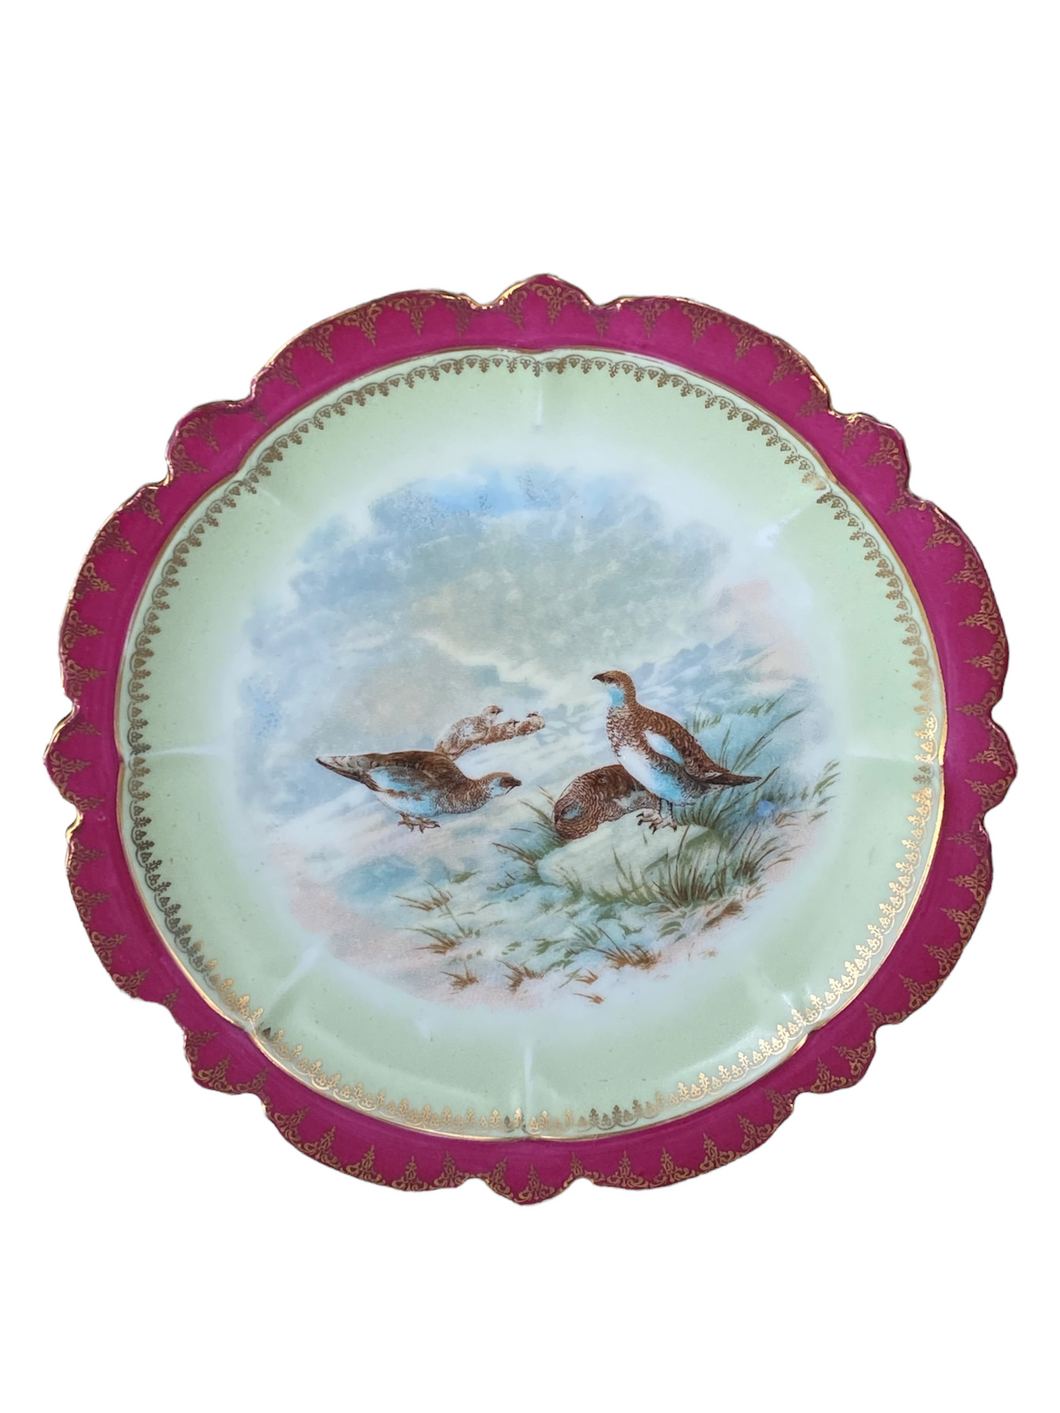 Decorative Plate #1